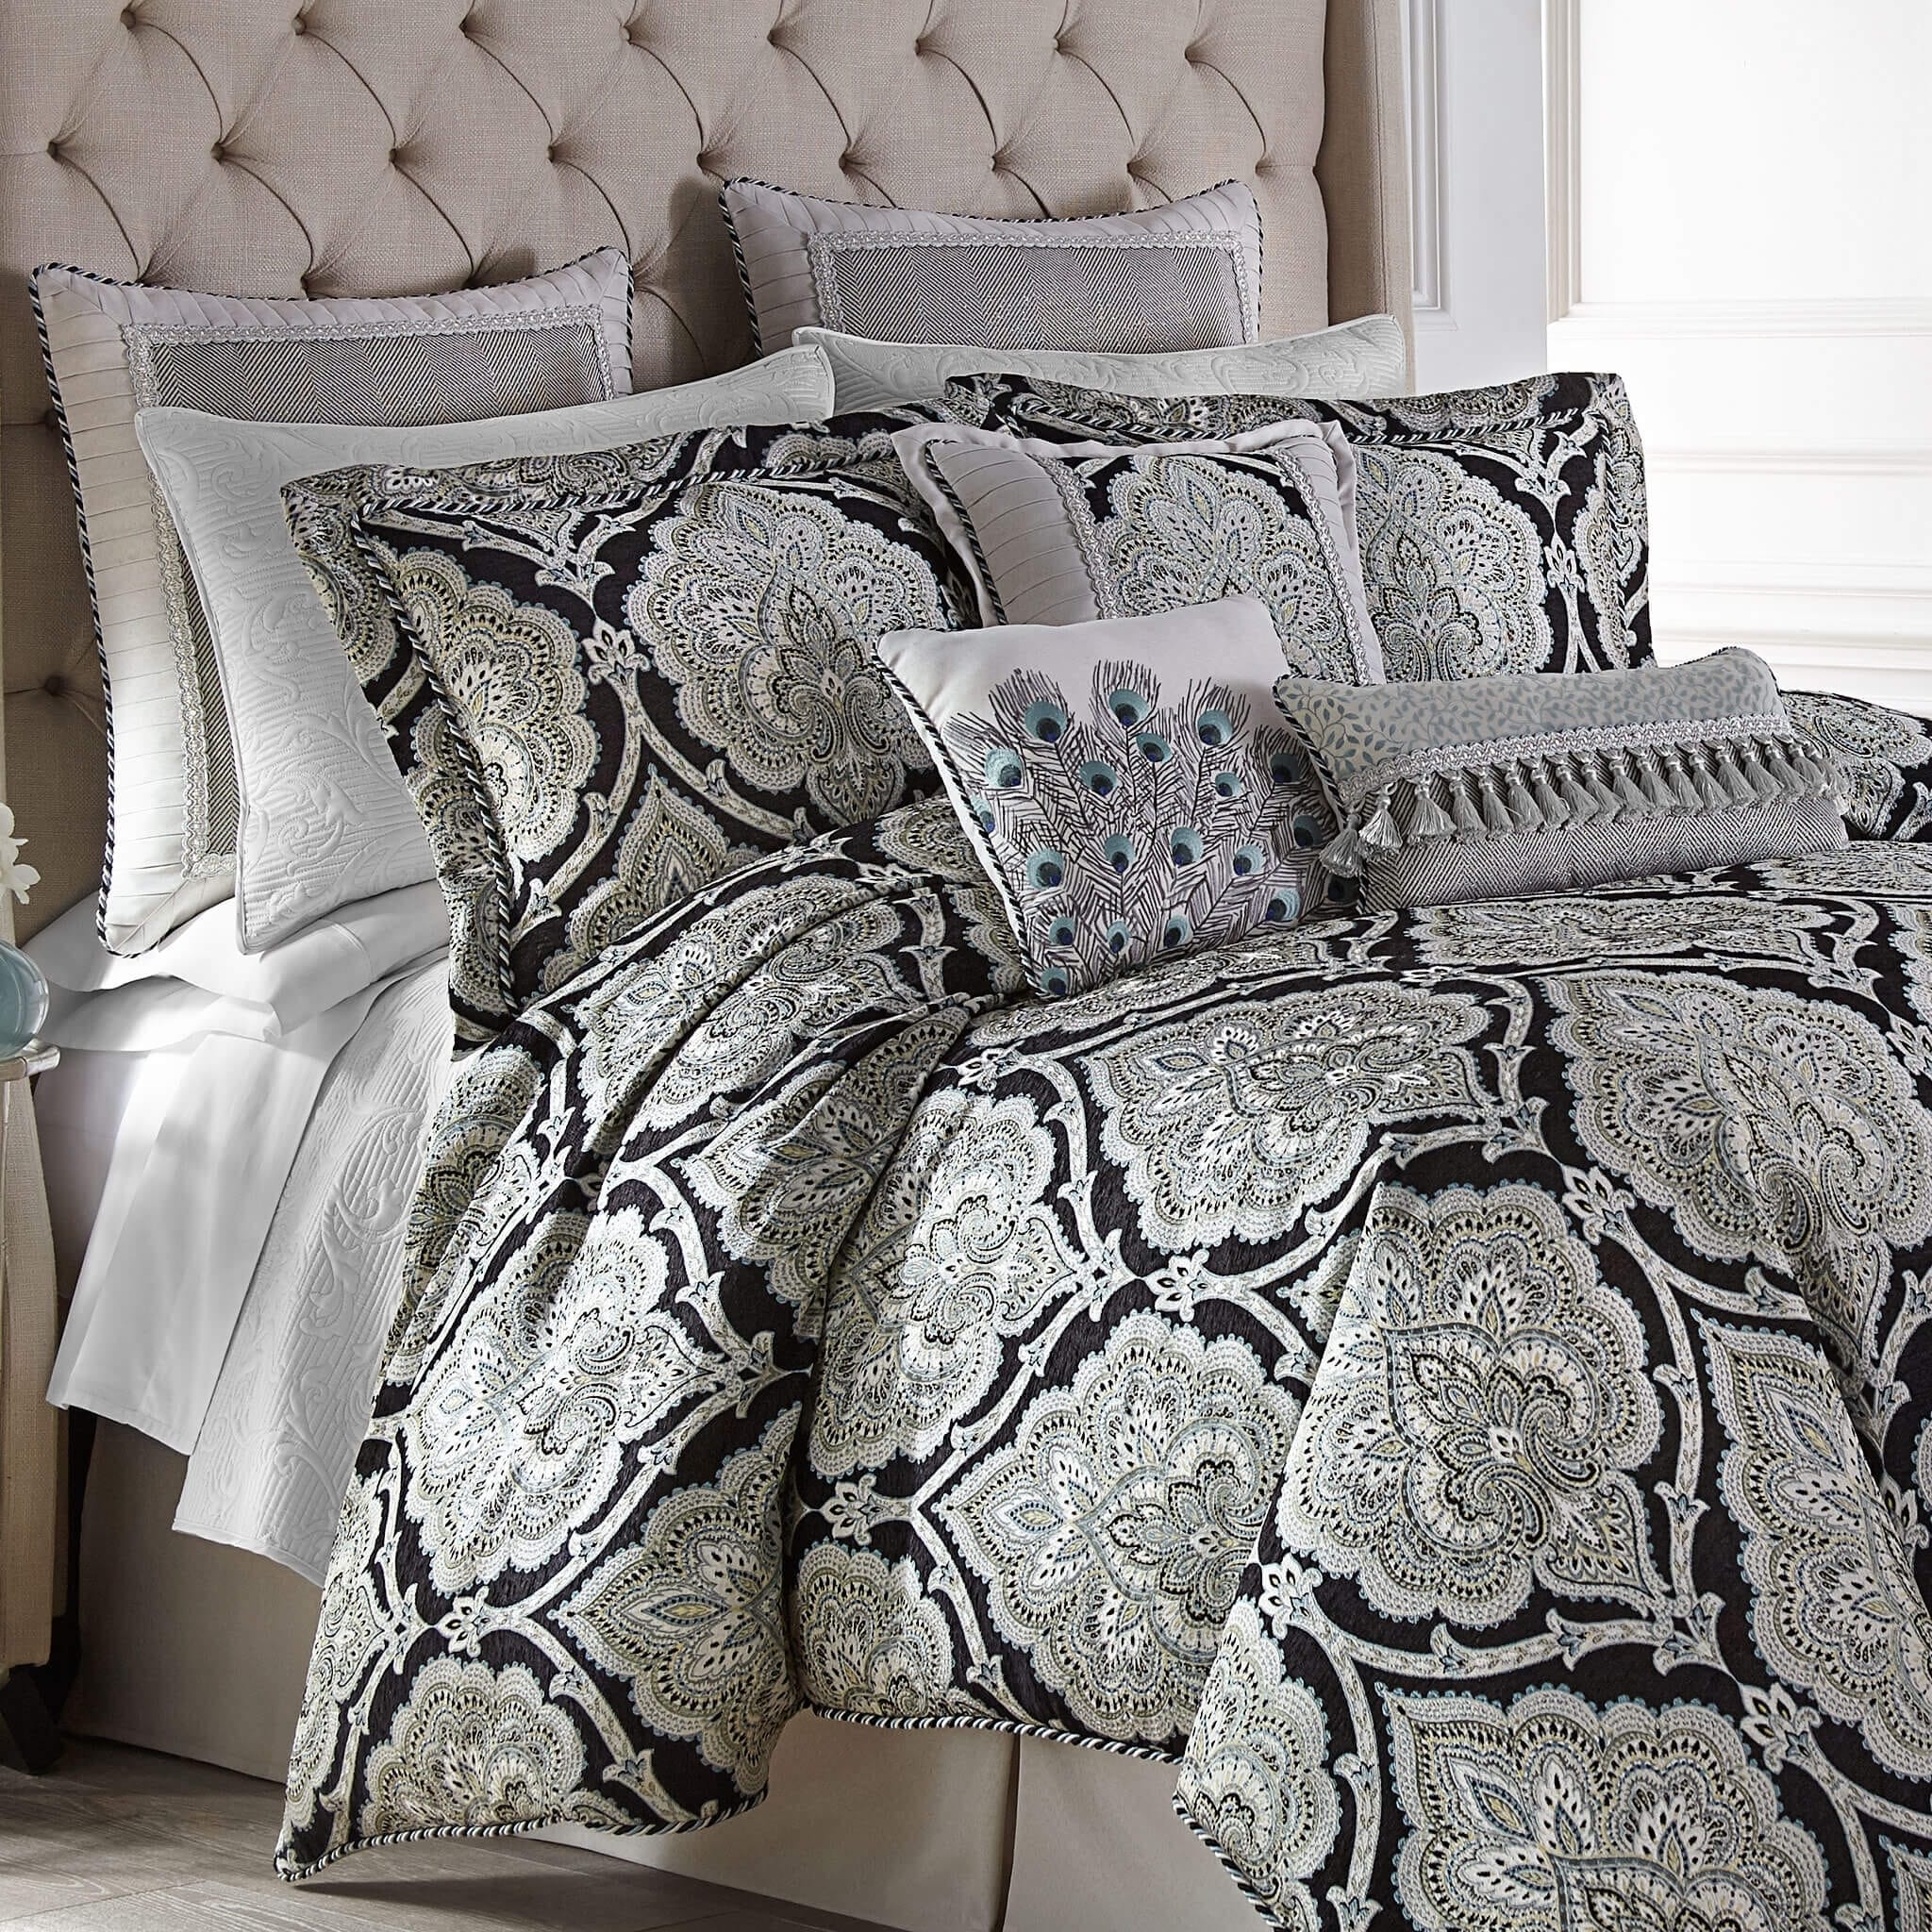 Shop Croscill Dianella Comforter Sets On Sale Overstock 29862303